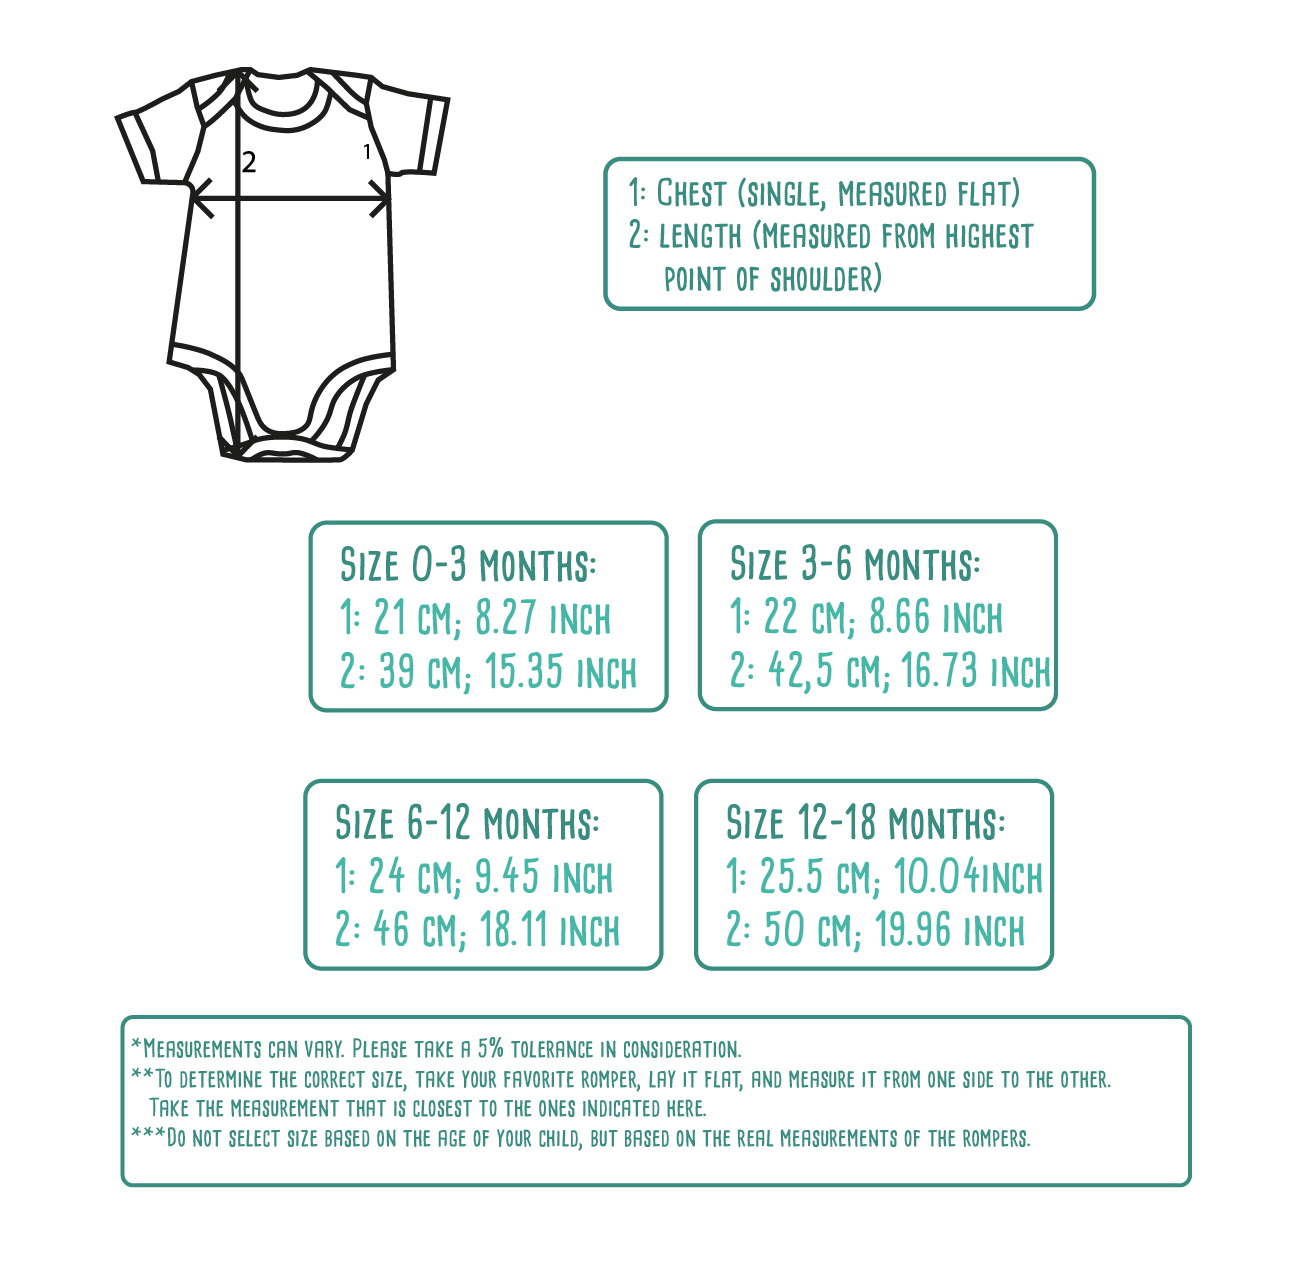 'Girls rule the world' baby shortsleeve bodysuit